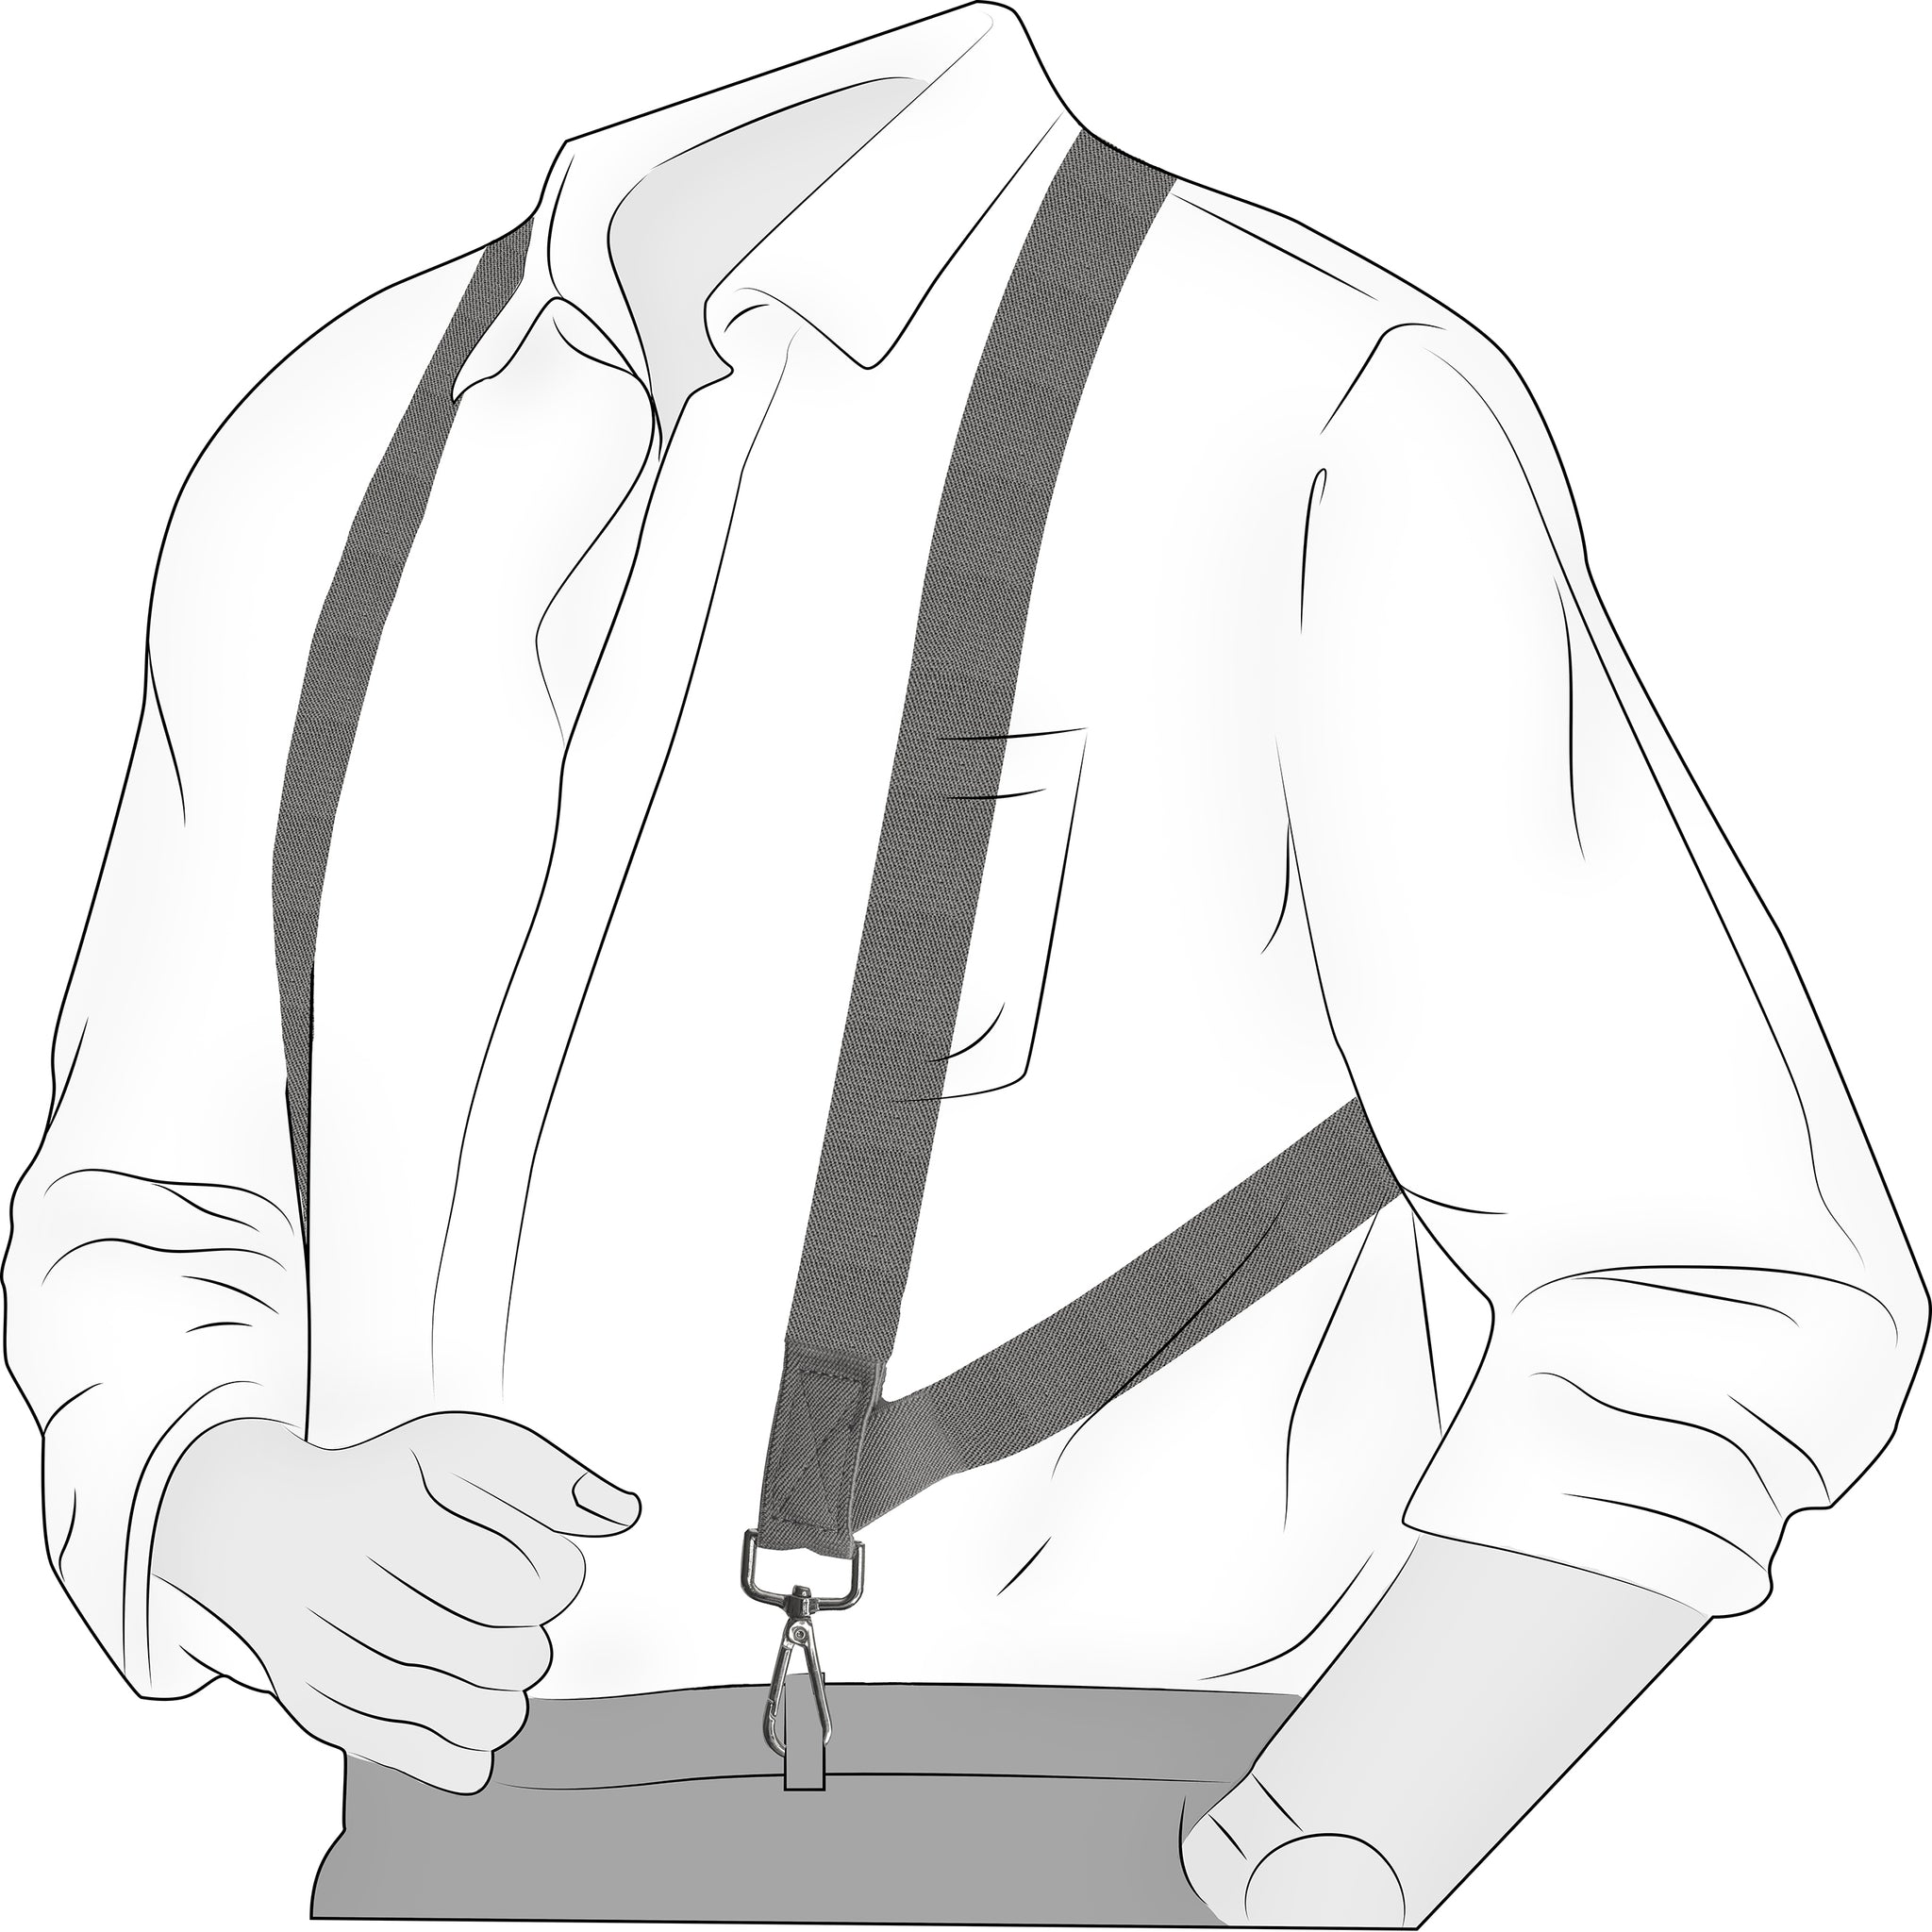 Chokore X-shaped Snap Hook Suspenders (Light Gray)